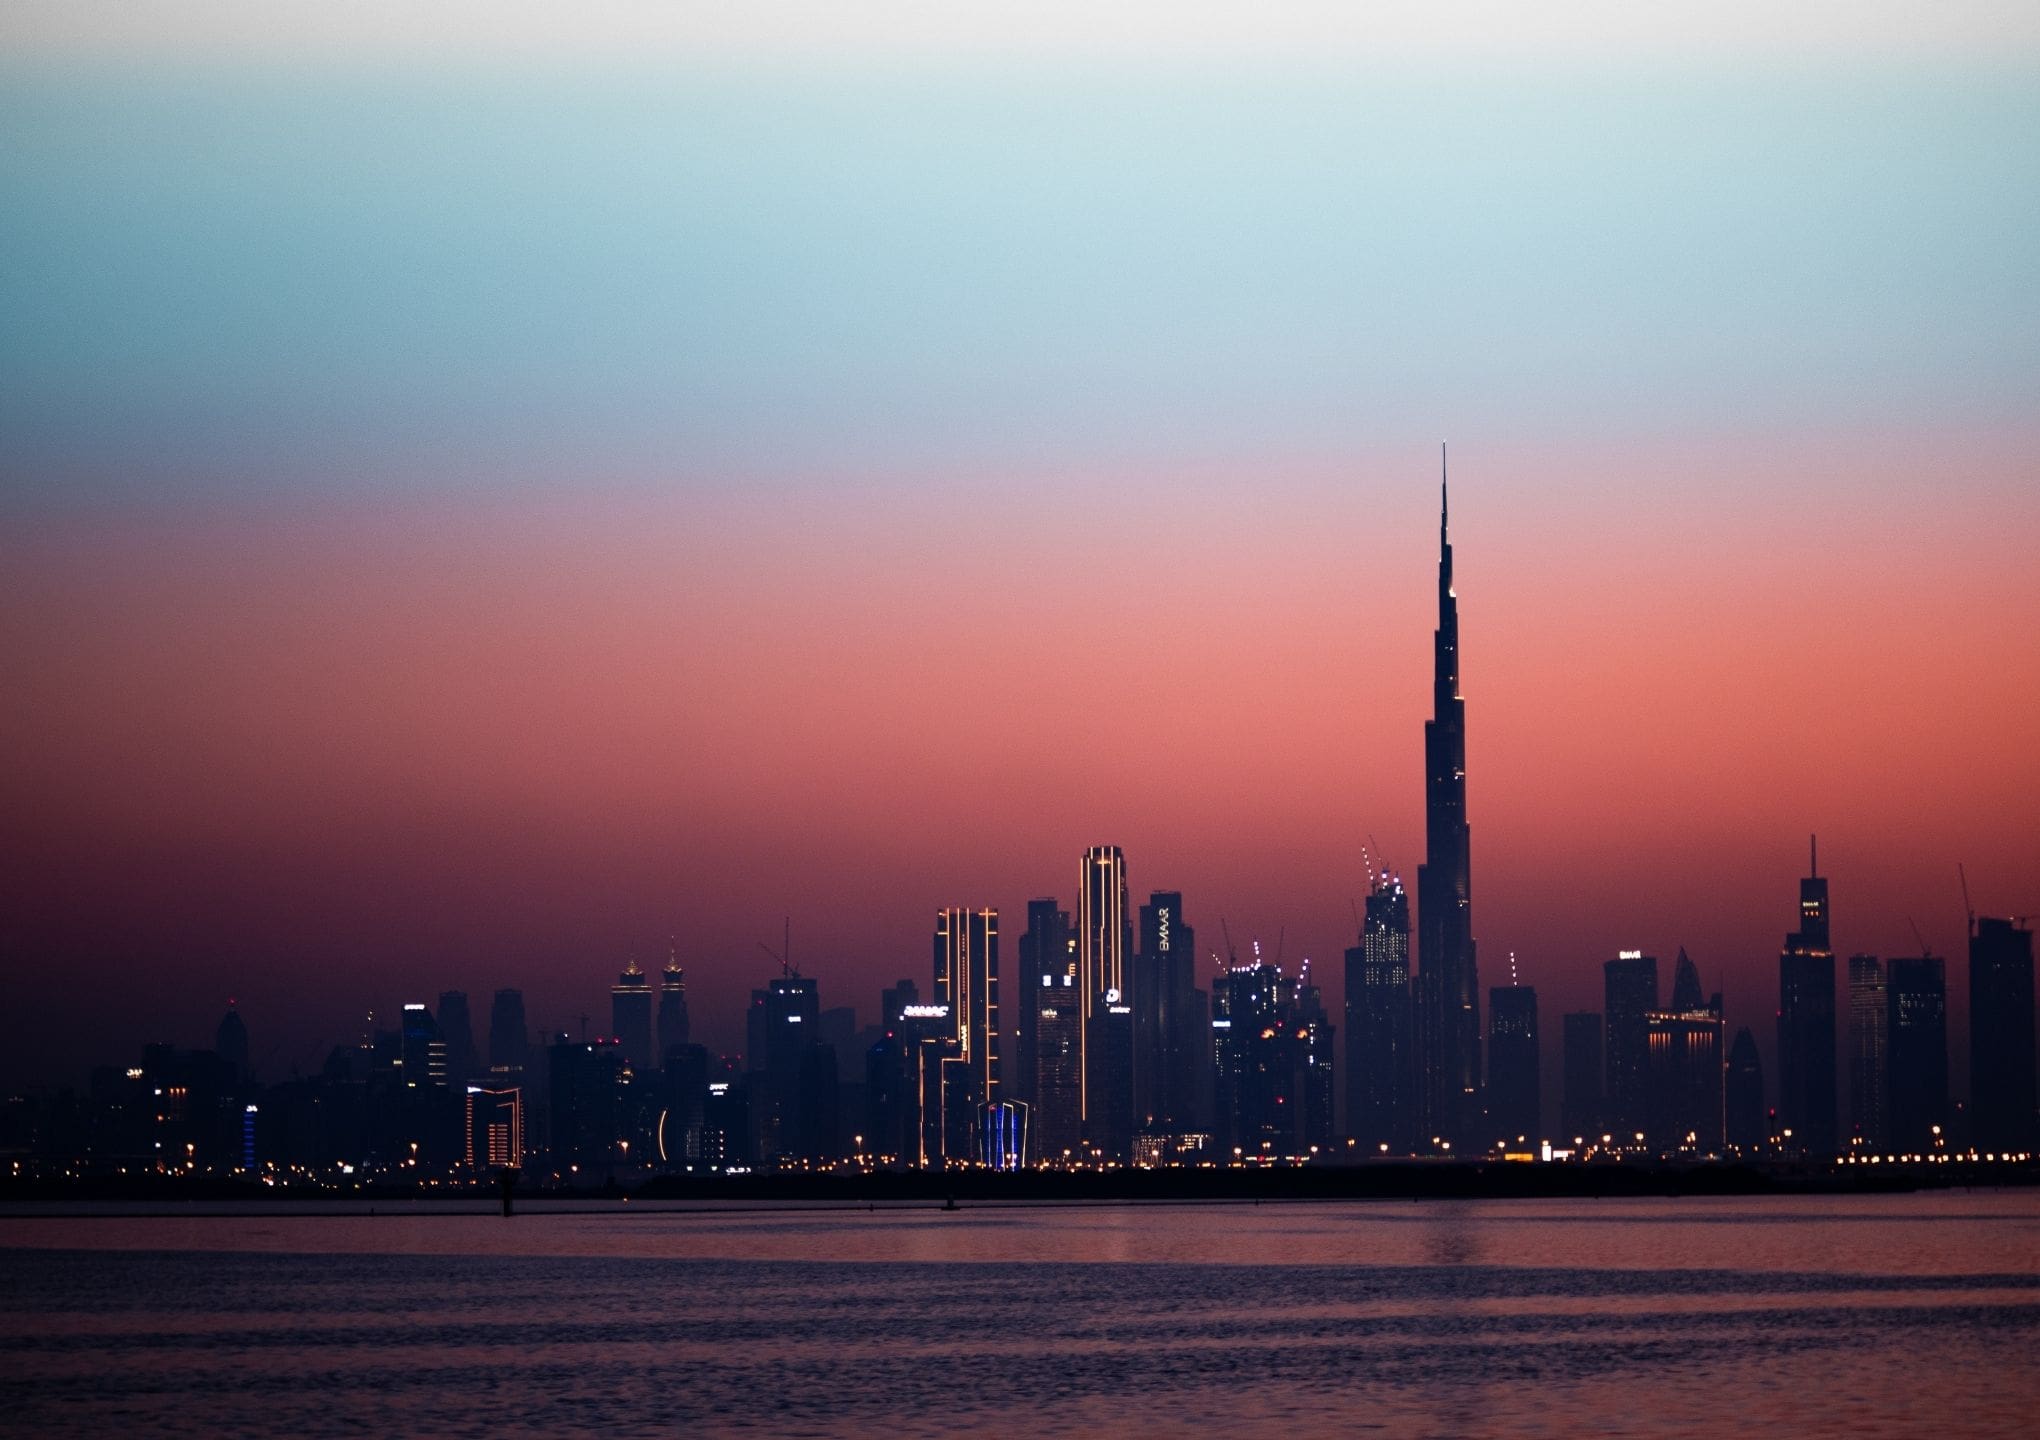 Dubai Multi Commodities Centre at sunset